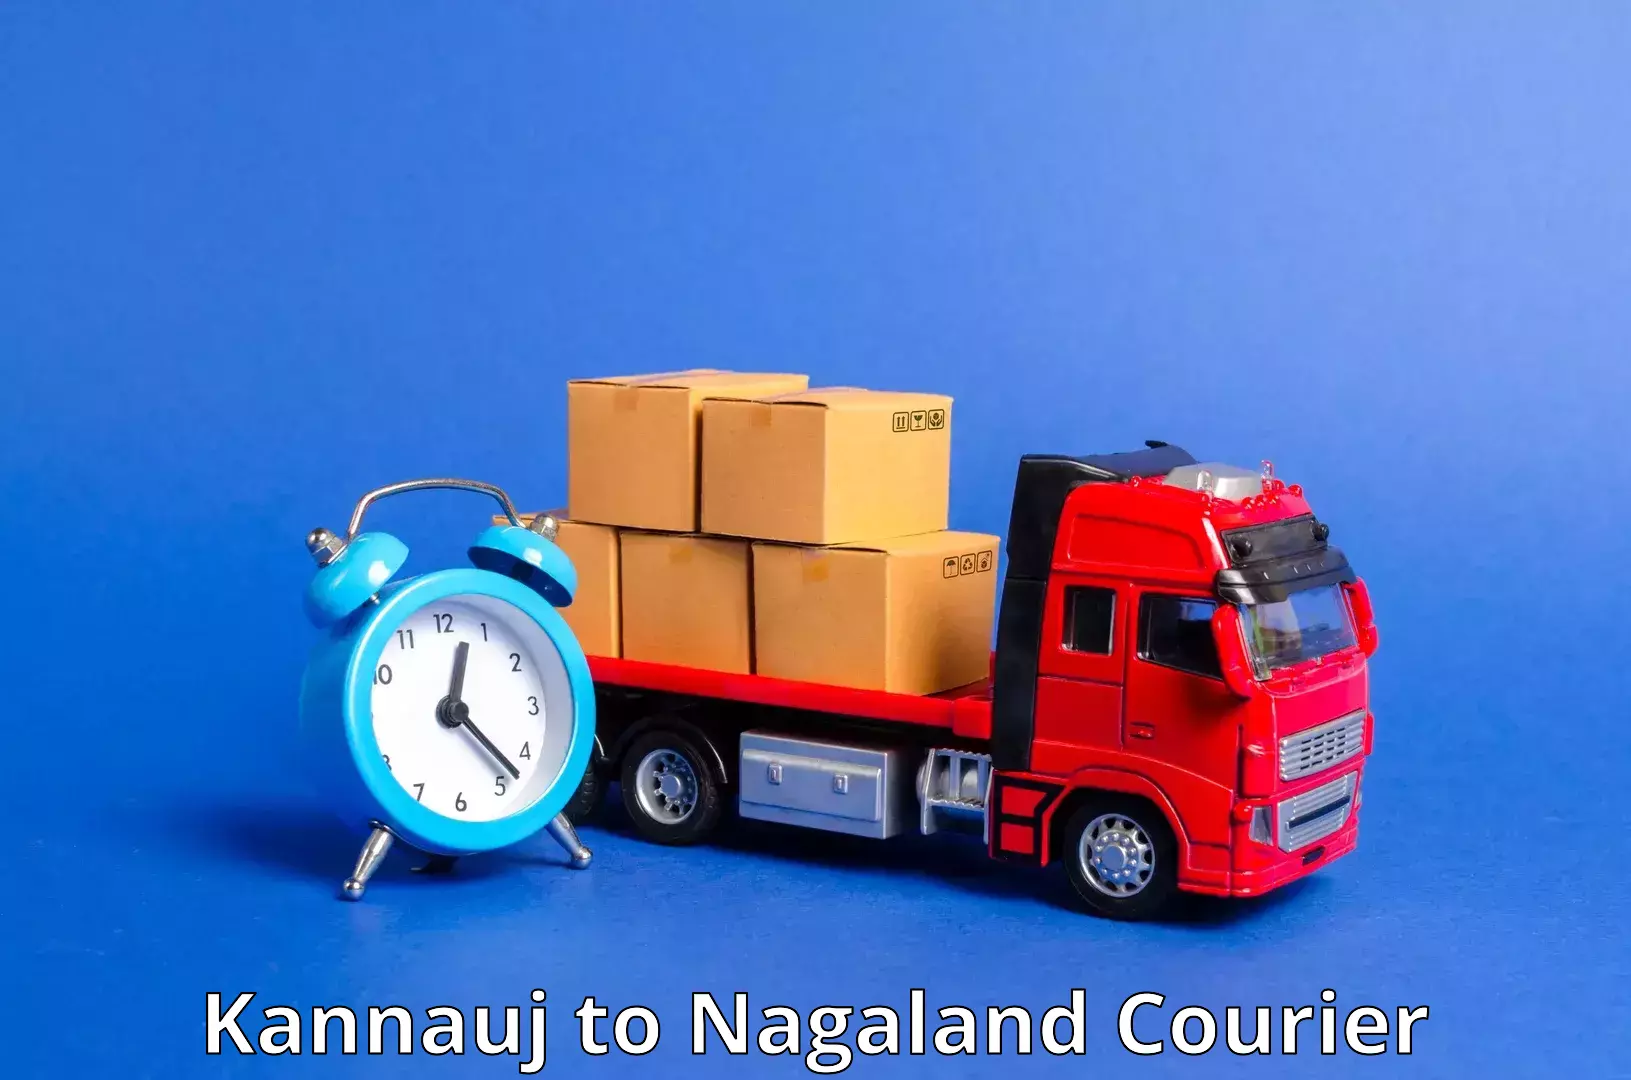 Cash on delivery service Kannauj to Nagaland